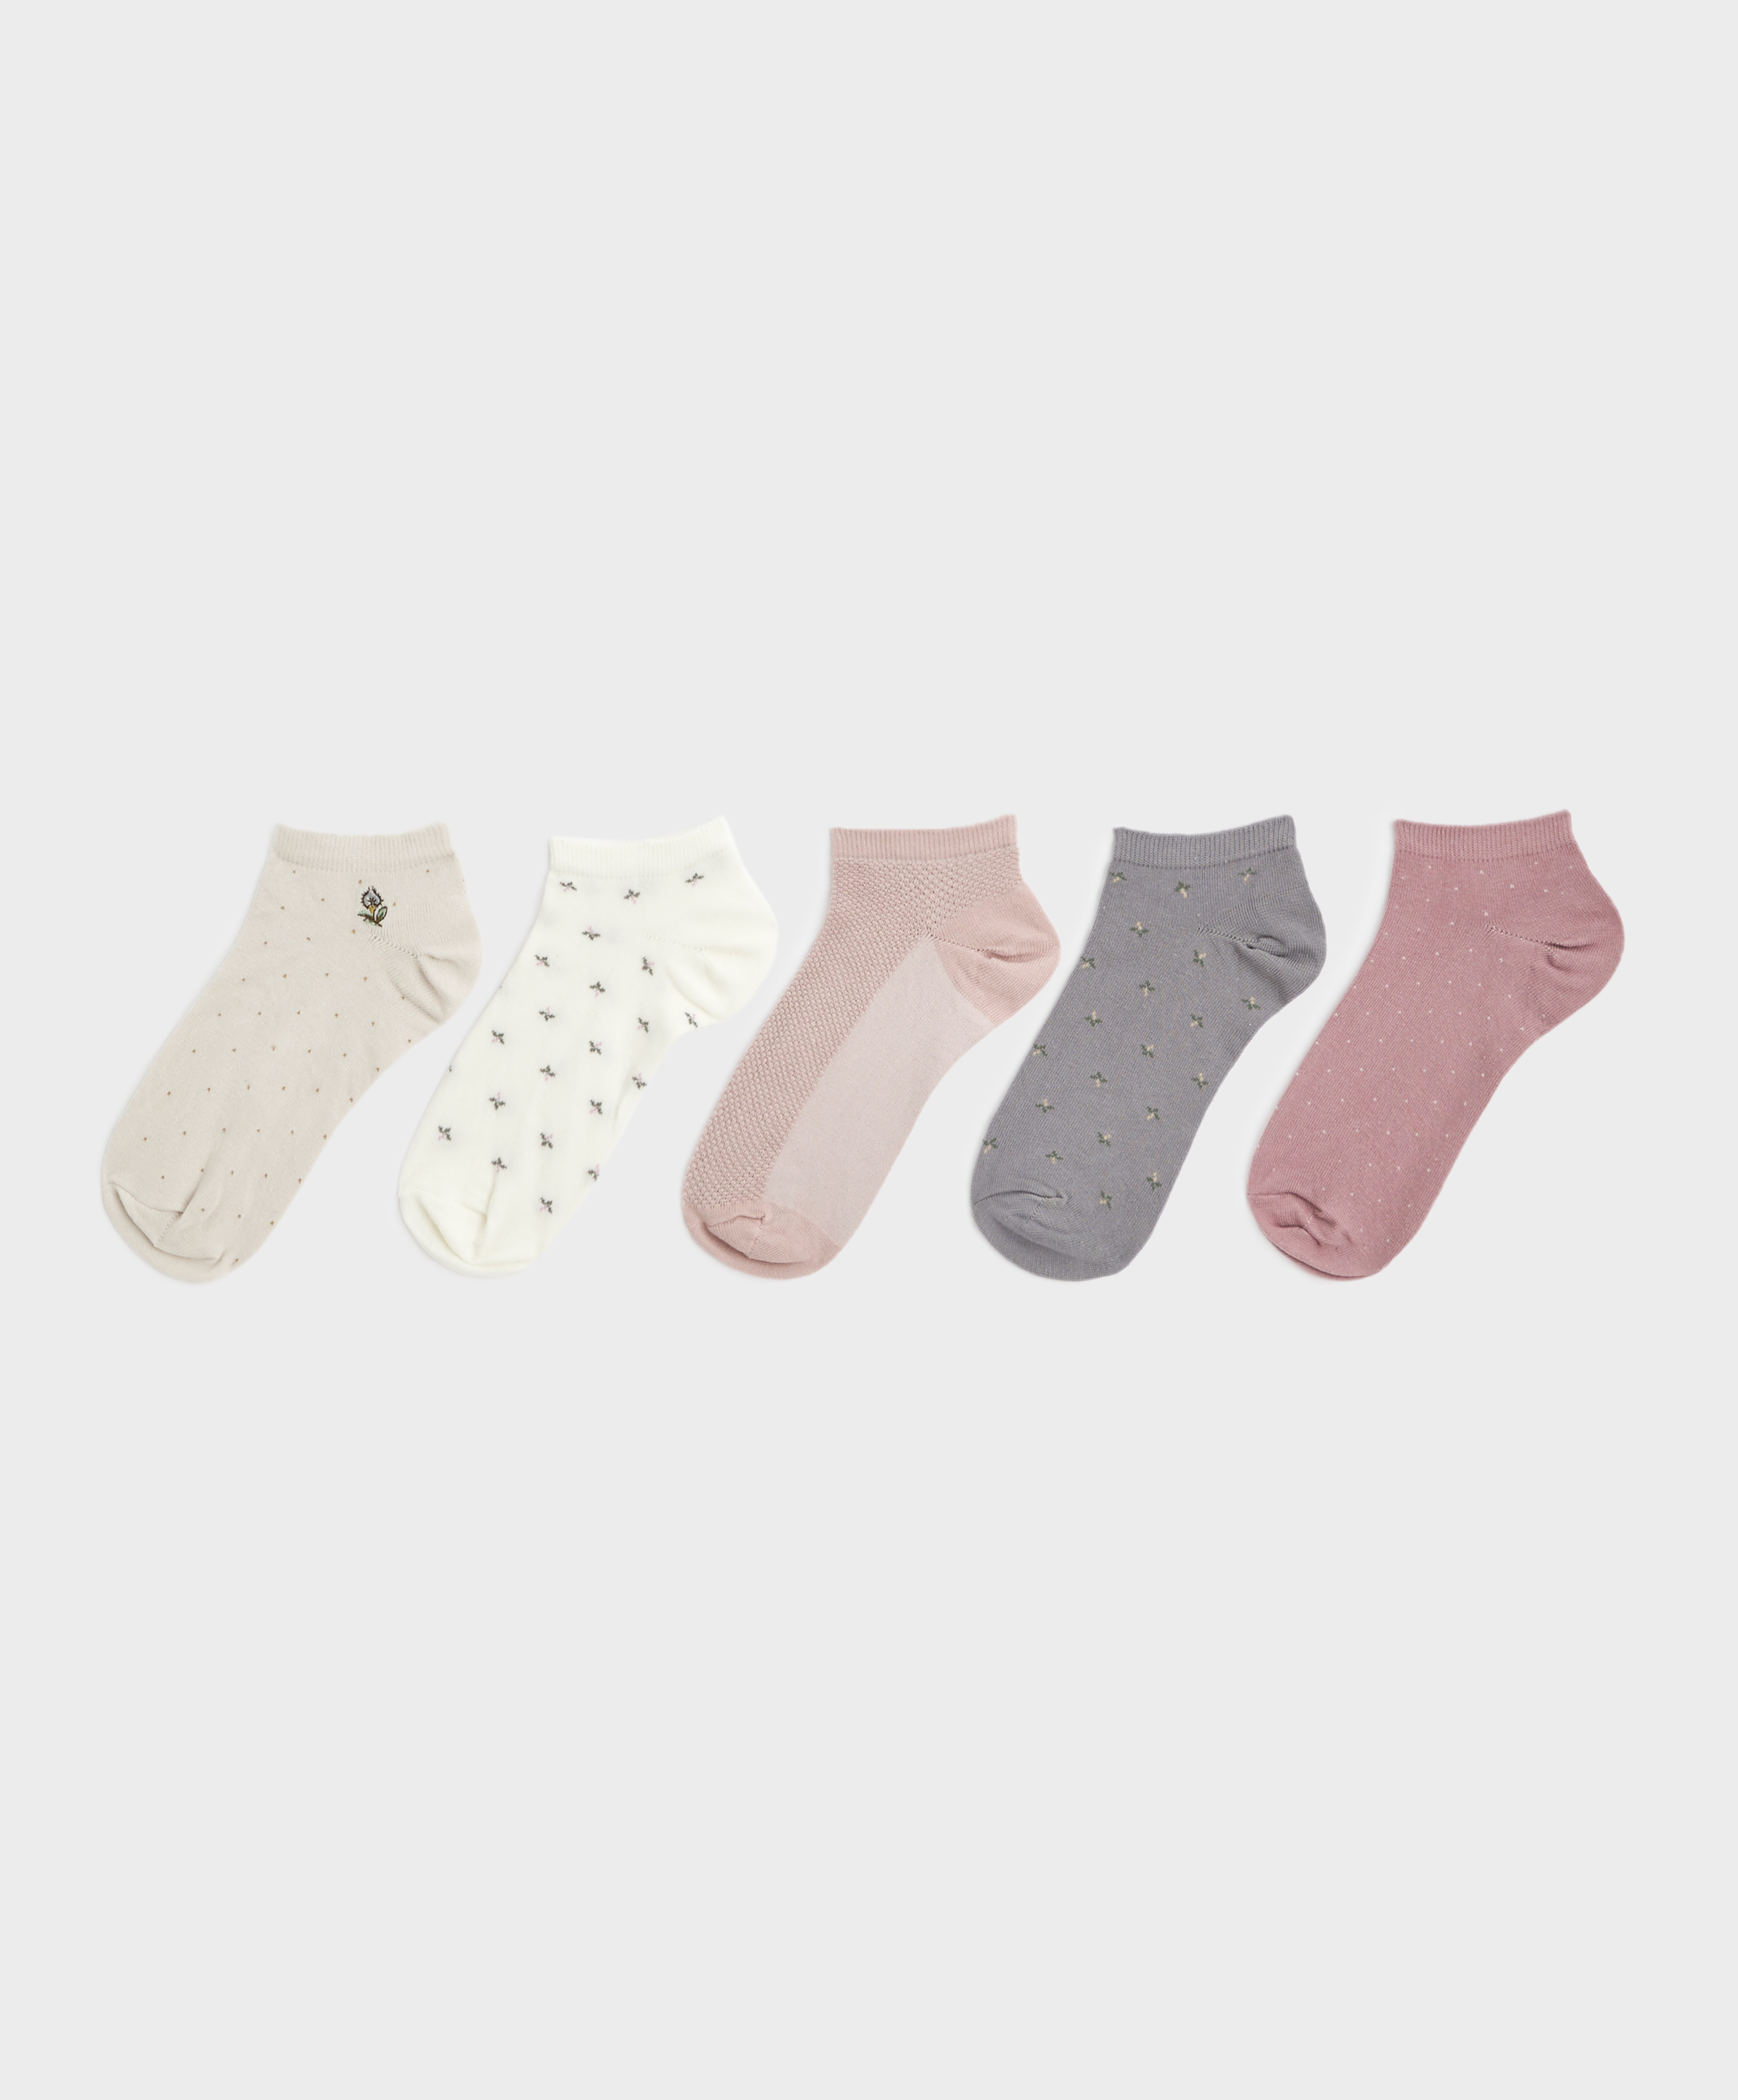 5 pairs of fantasy cotton trainer socks